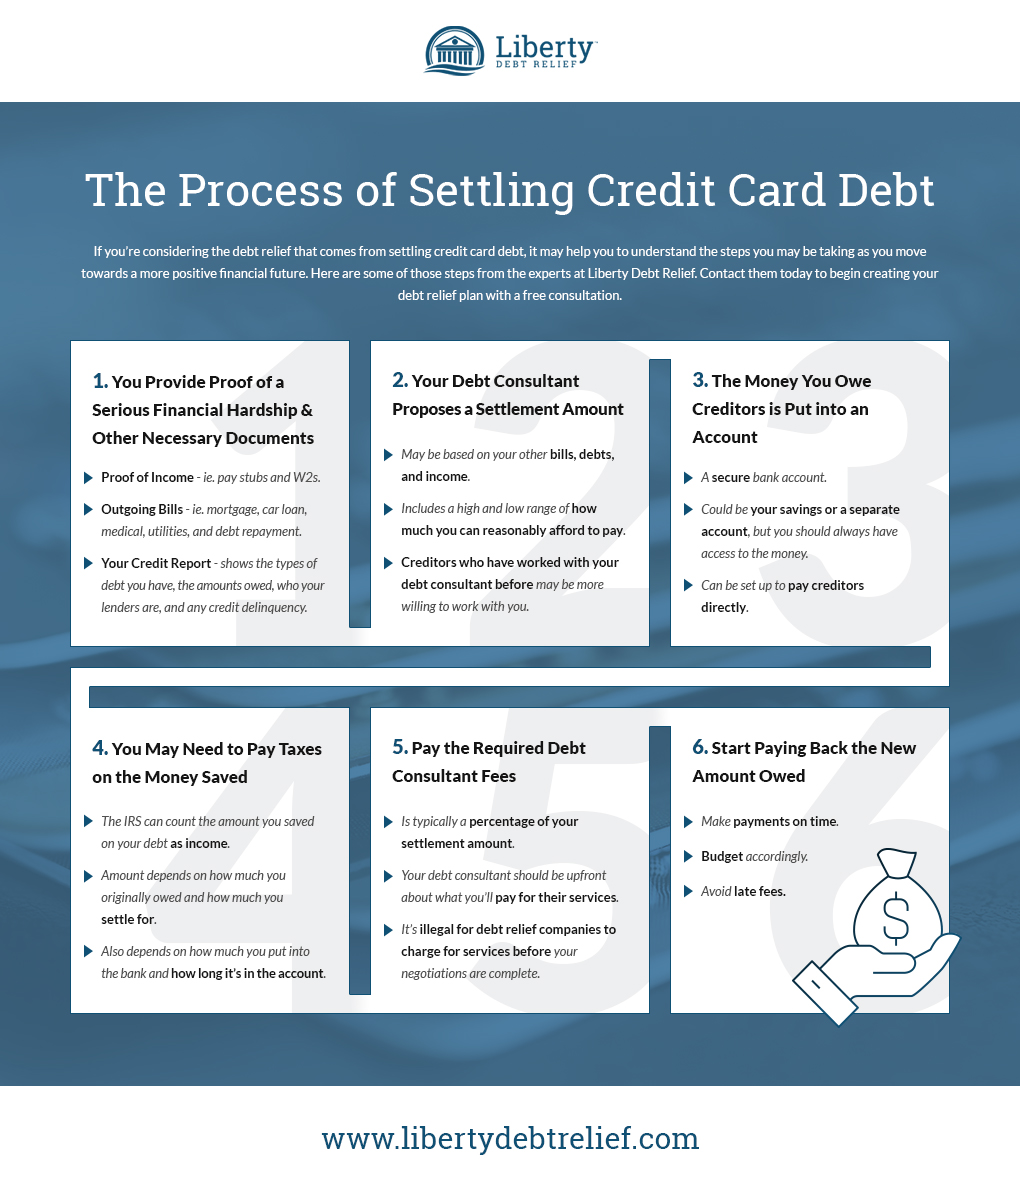 Three Types of Debt Help